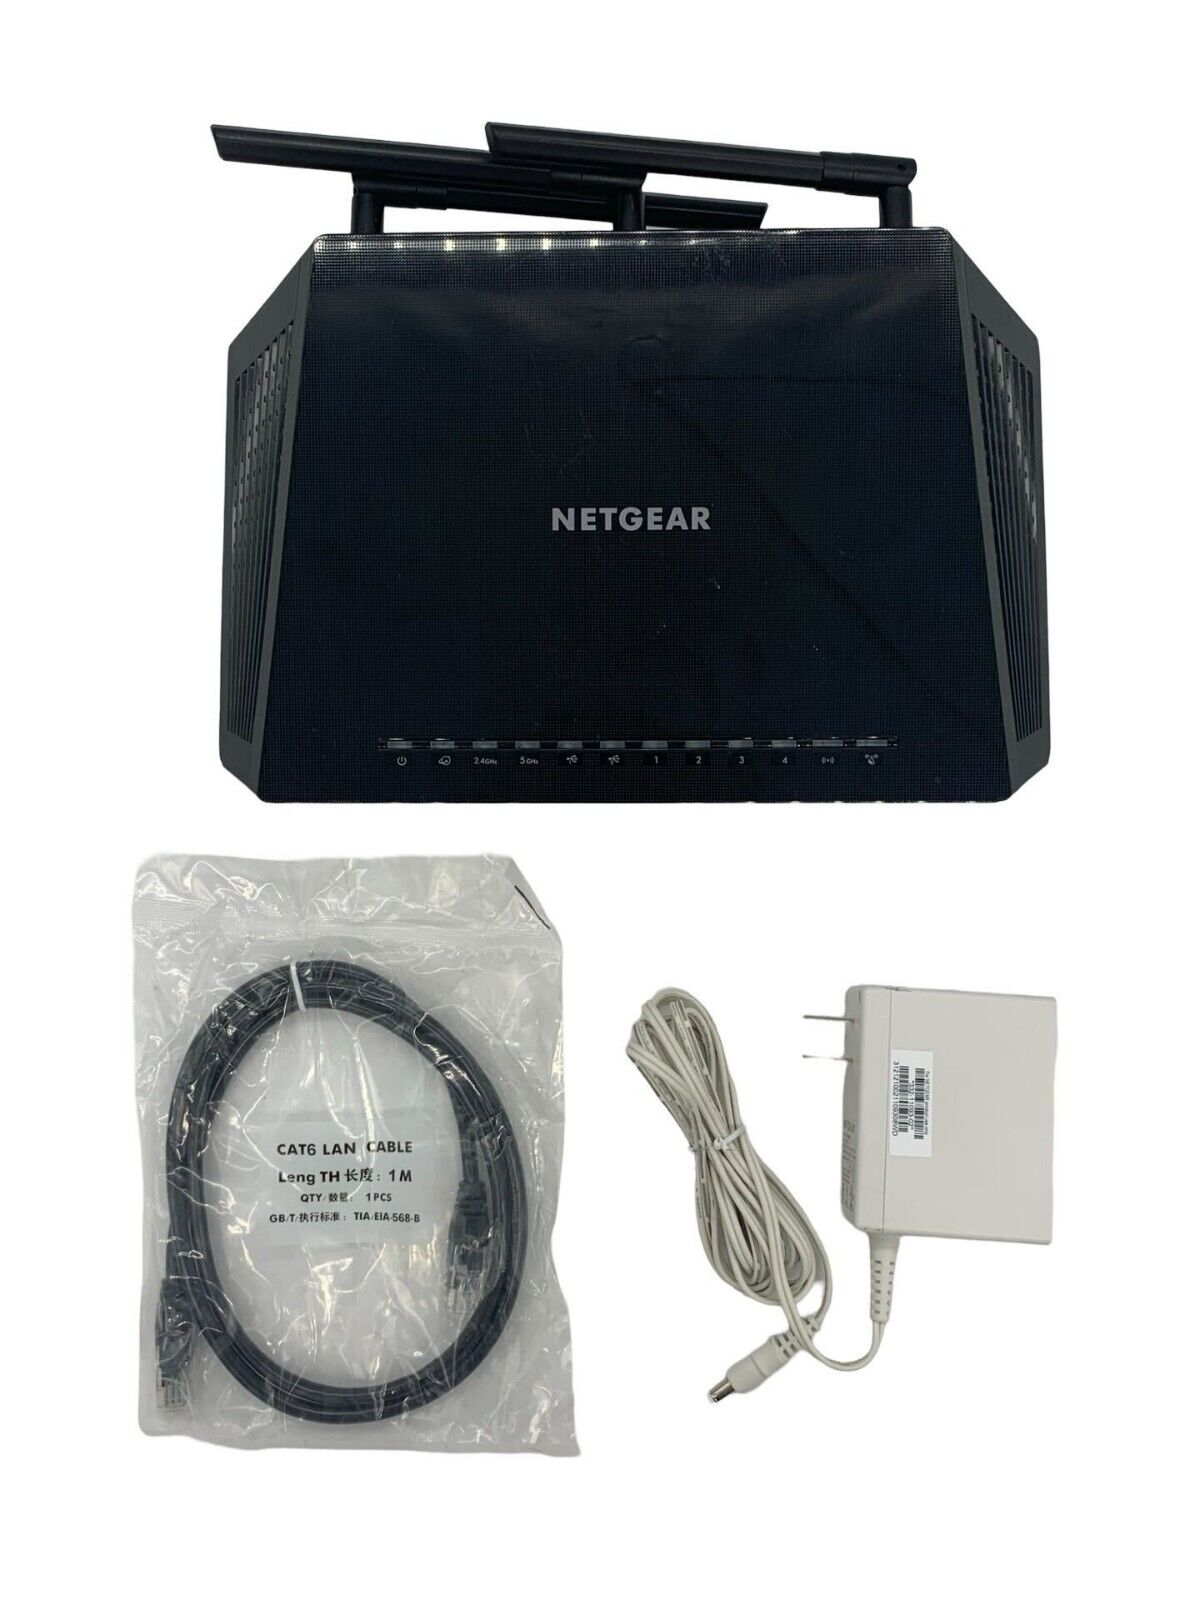 Netgear R6400 - AC1750 Smart Wi-Fi Router (R6400v2) - UD READ